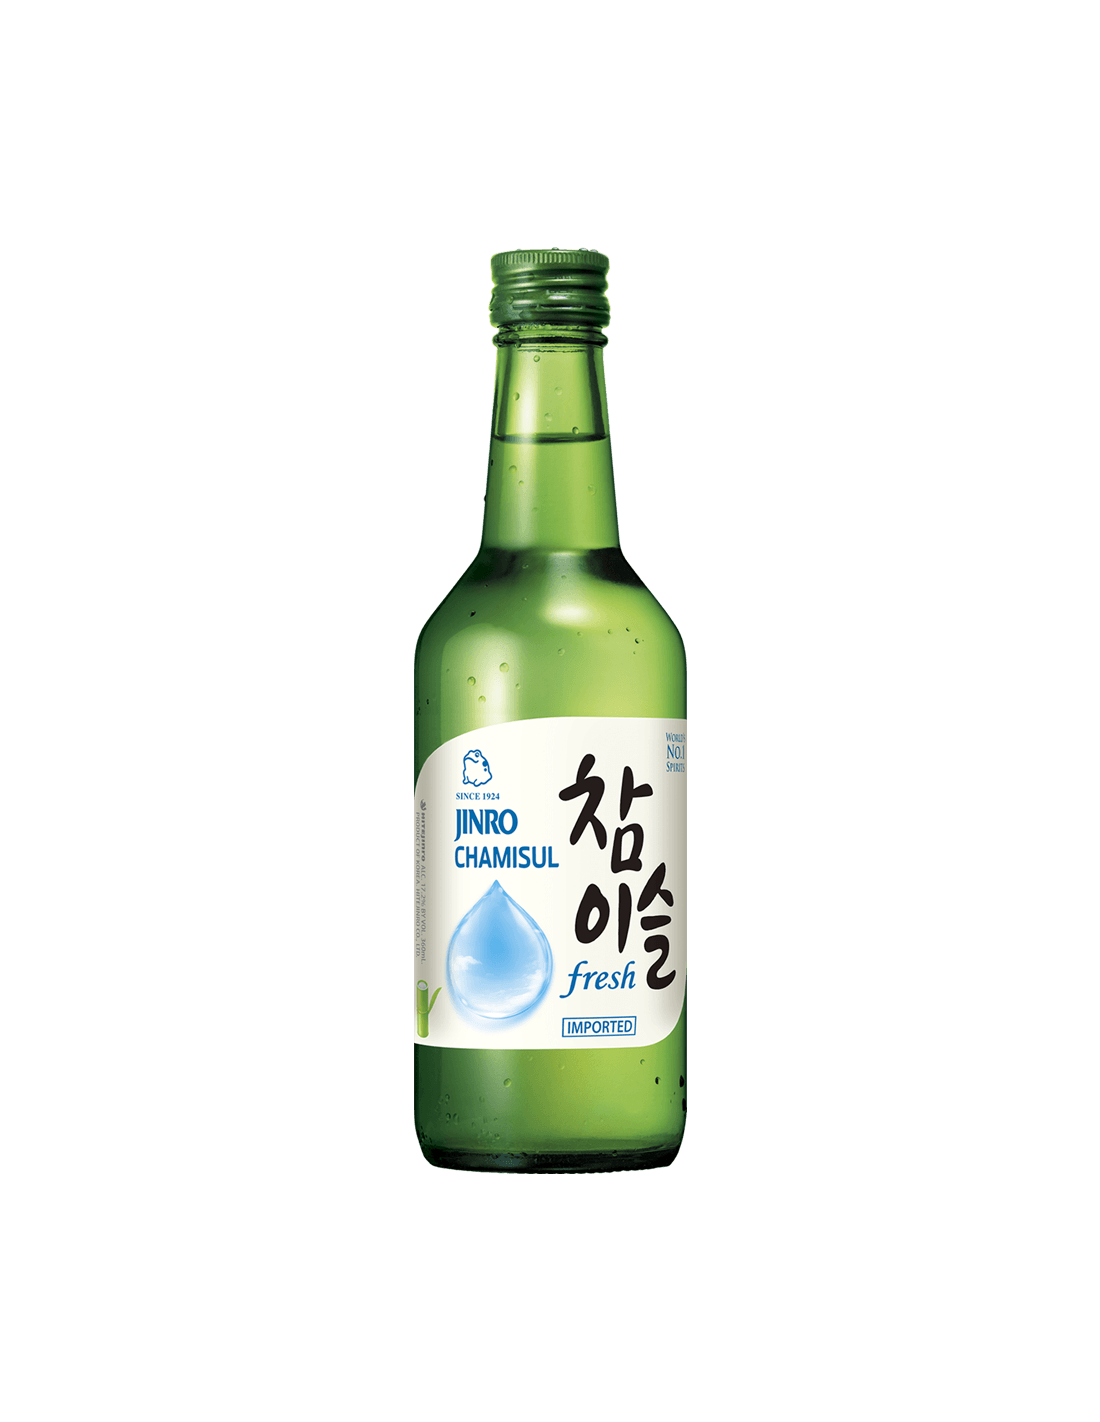 Bautura traditionala Jinro Soju Chamisul Fresh, 17% alc., 0.36L, Coreea alcooldiscount.ro